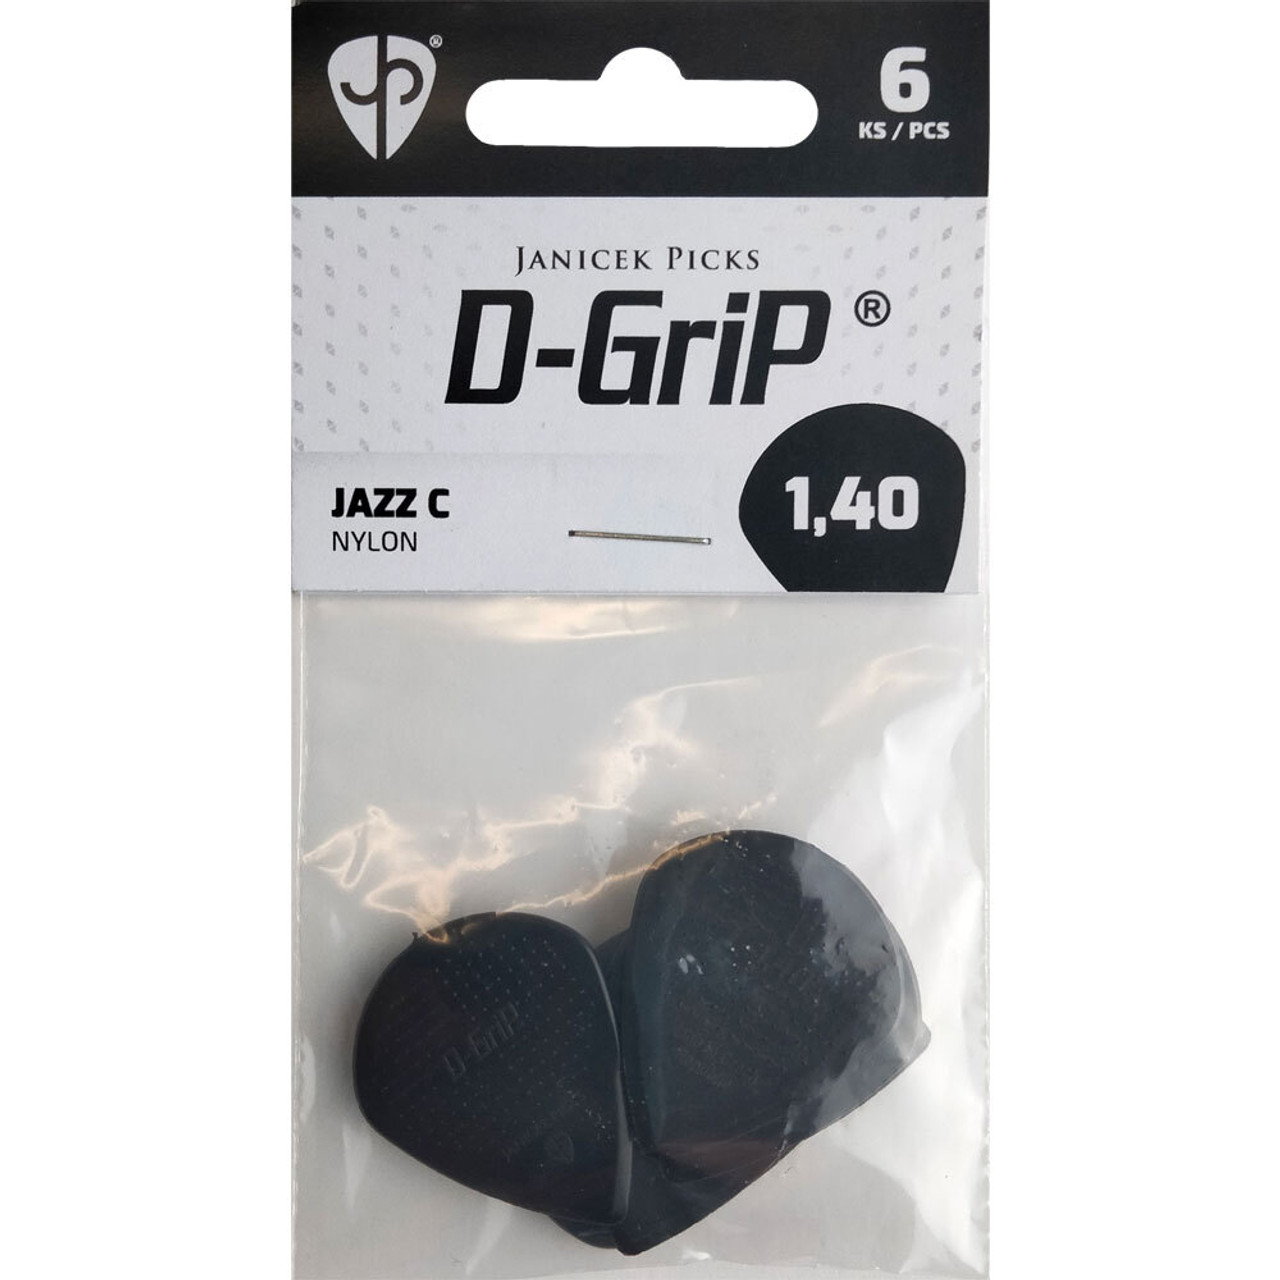 Janicek D-Grip Jazz-C Series Pick in Black (1.40mm) - 6pk